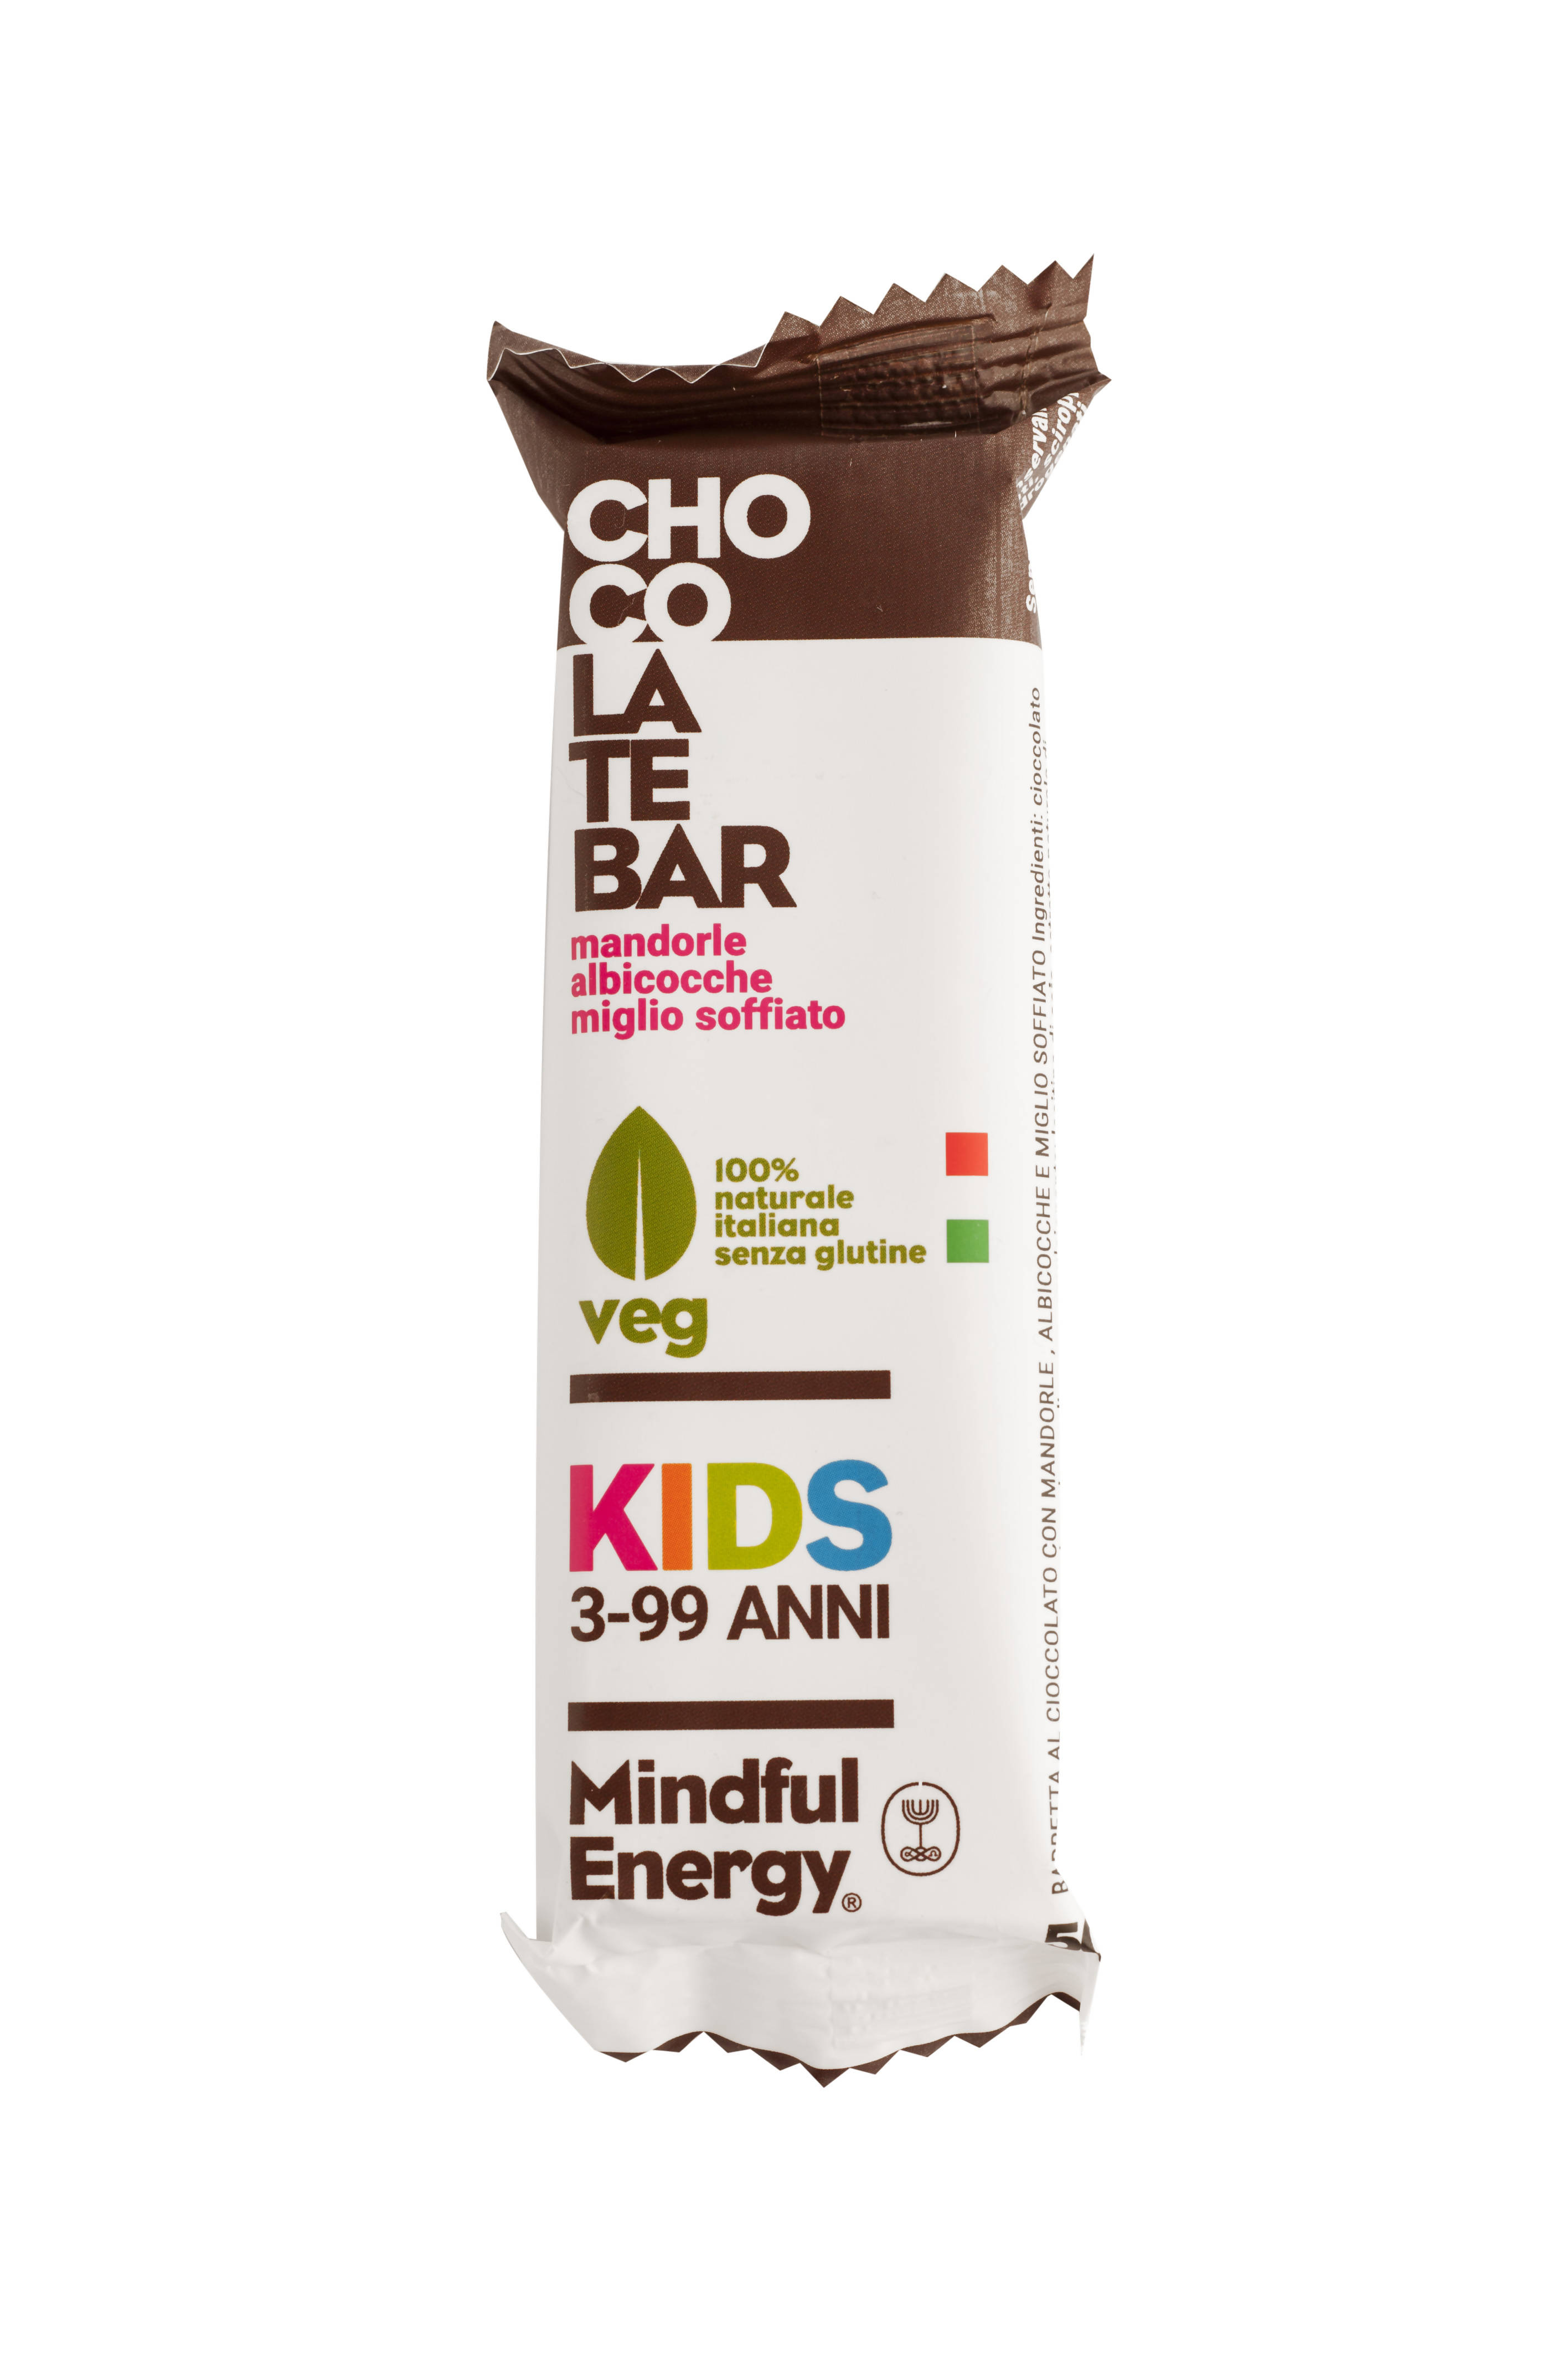 Mindful Energy KIDS Chocolate Bar - mandorle/albicocche/miglio soffiat